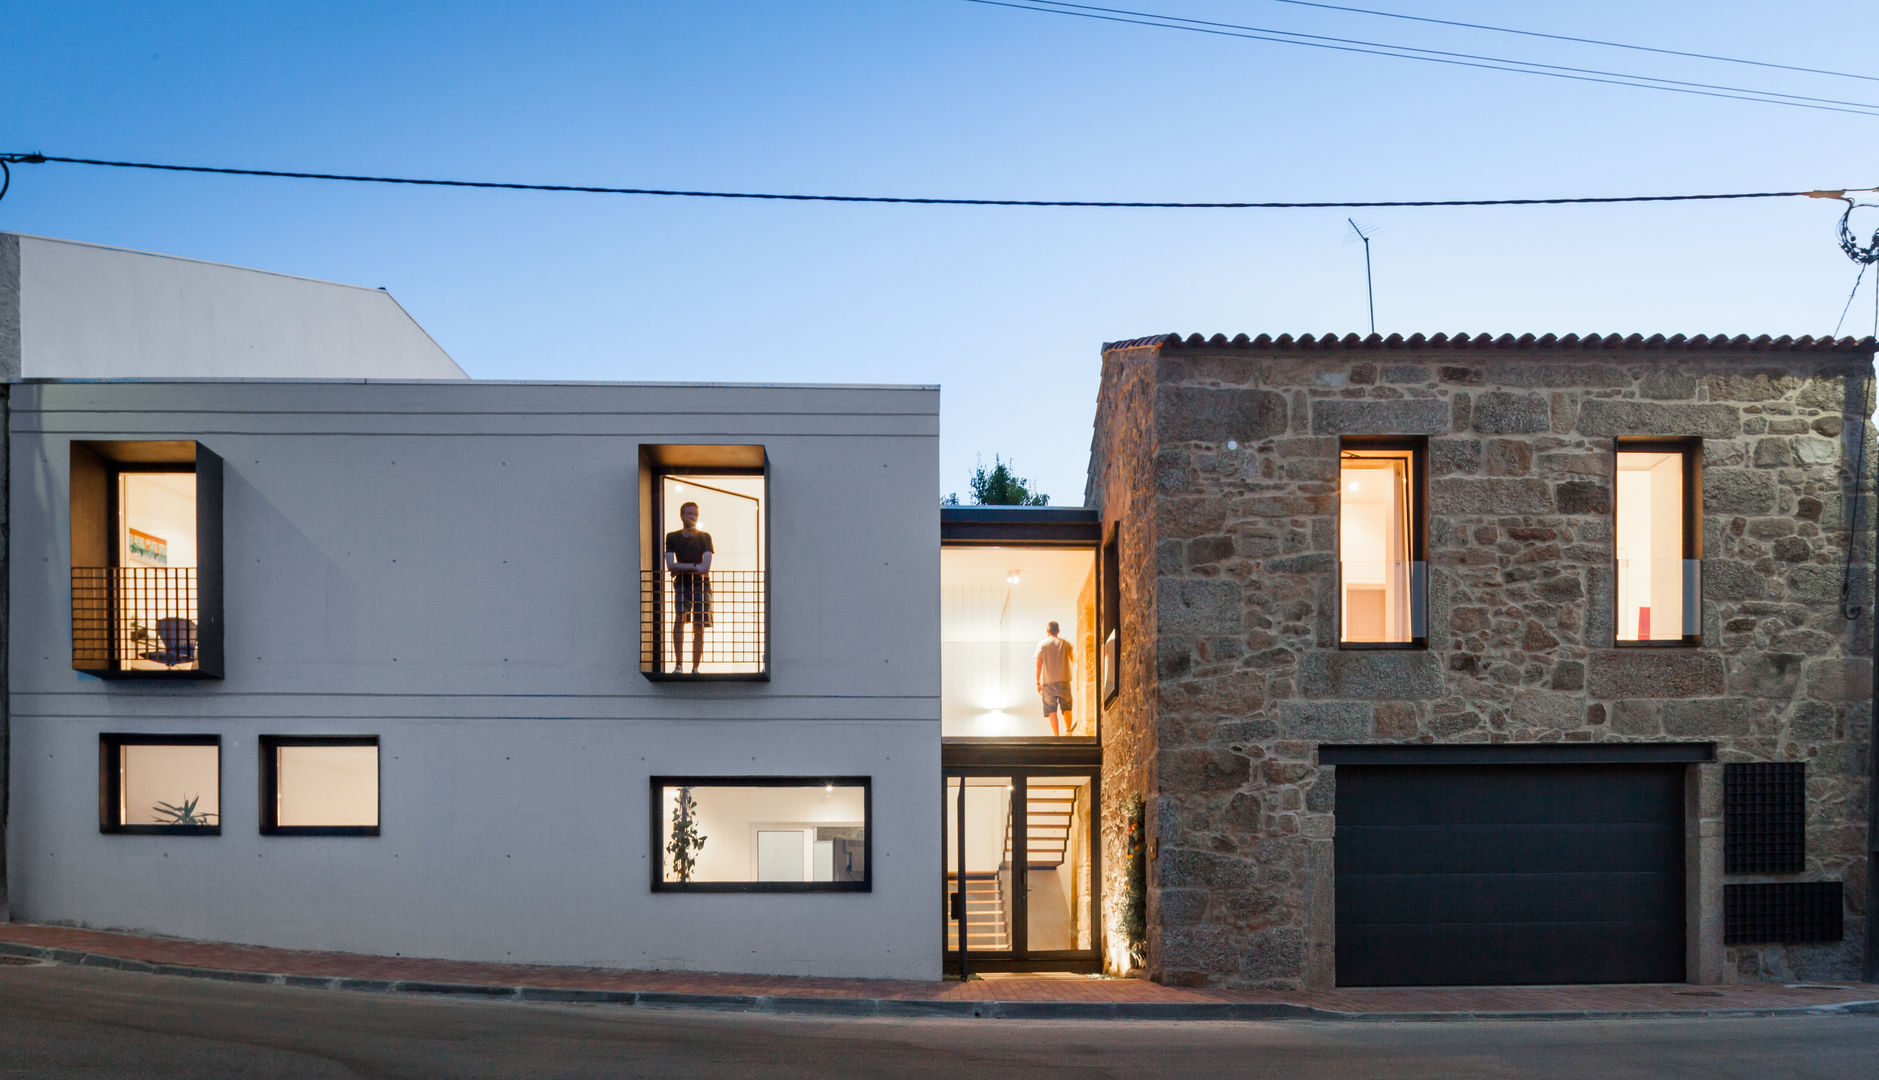 House JA - designed by Filipe Pina and Inês Costa., Joao Morgado - Architectural Photography Joao Morgado - Architectural Photography Habitaciones